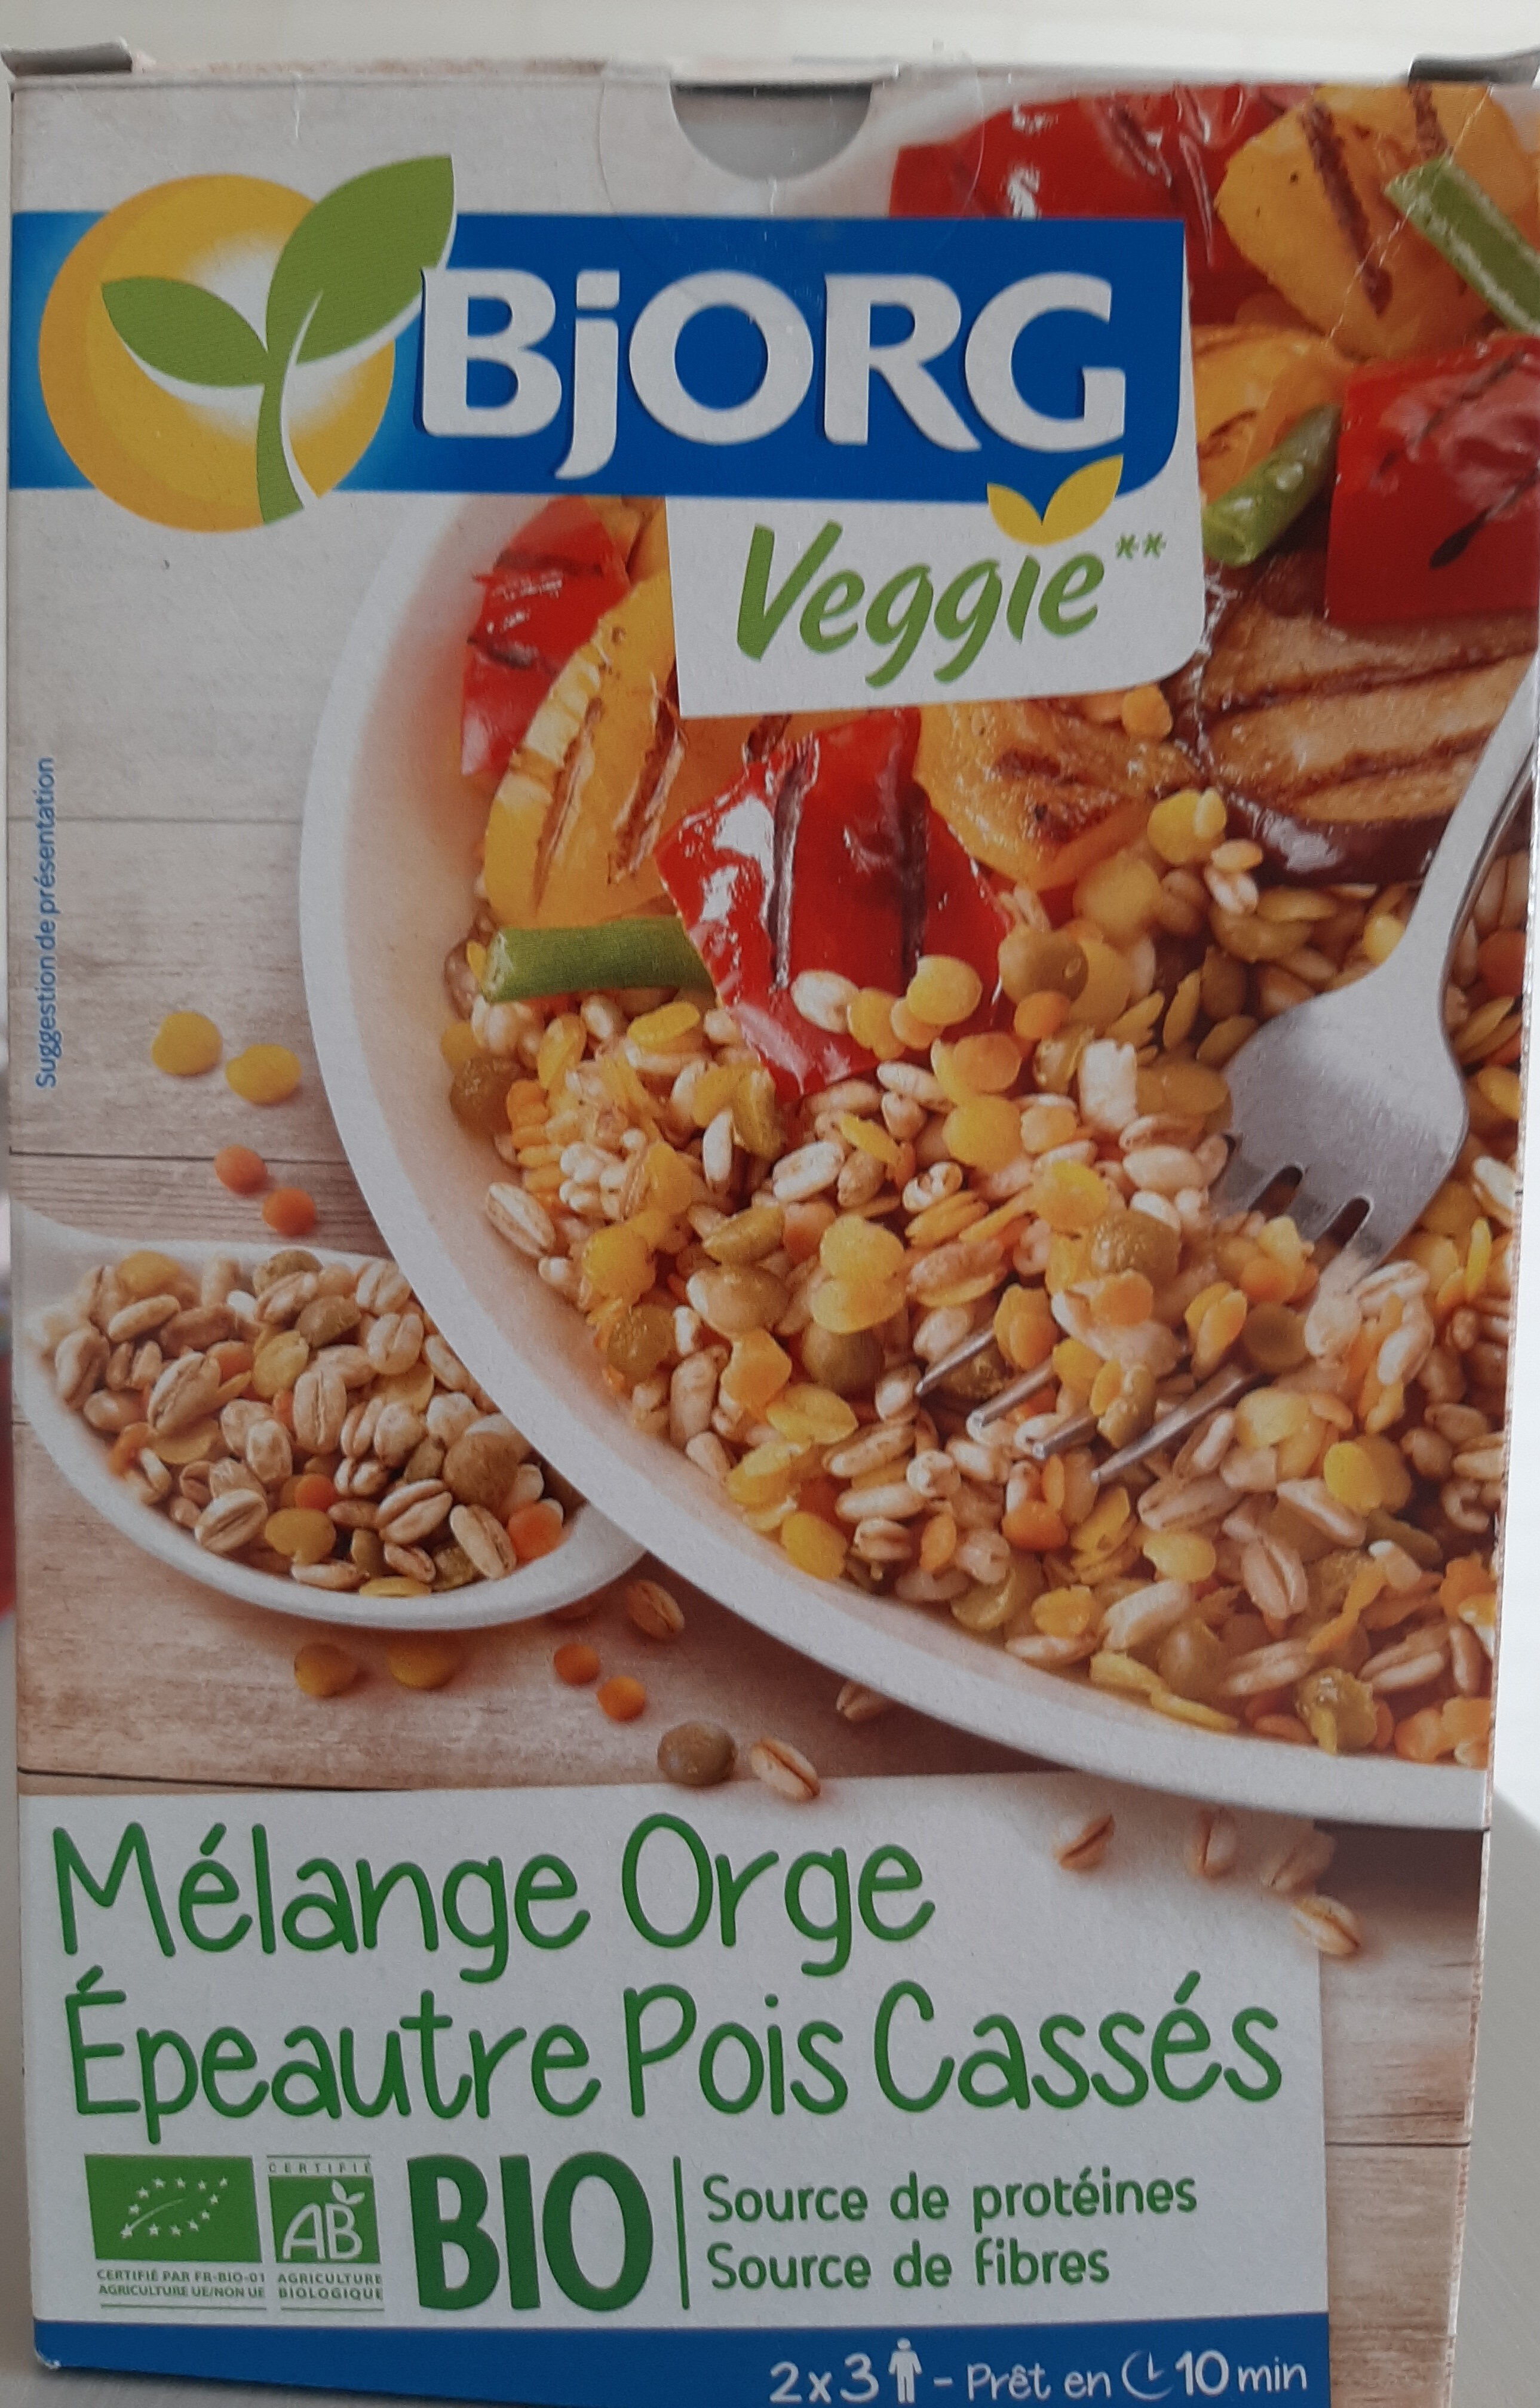 Bjorg veggie - Product - fr